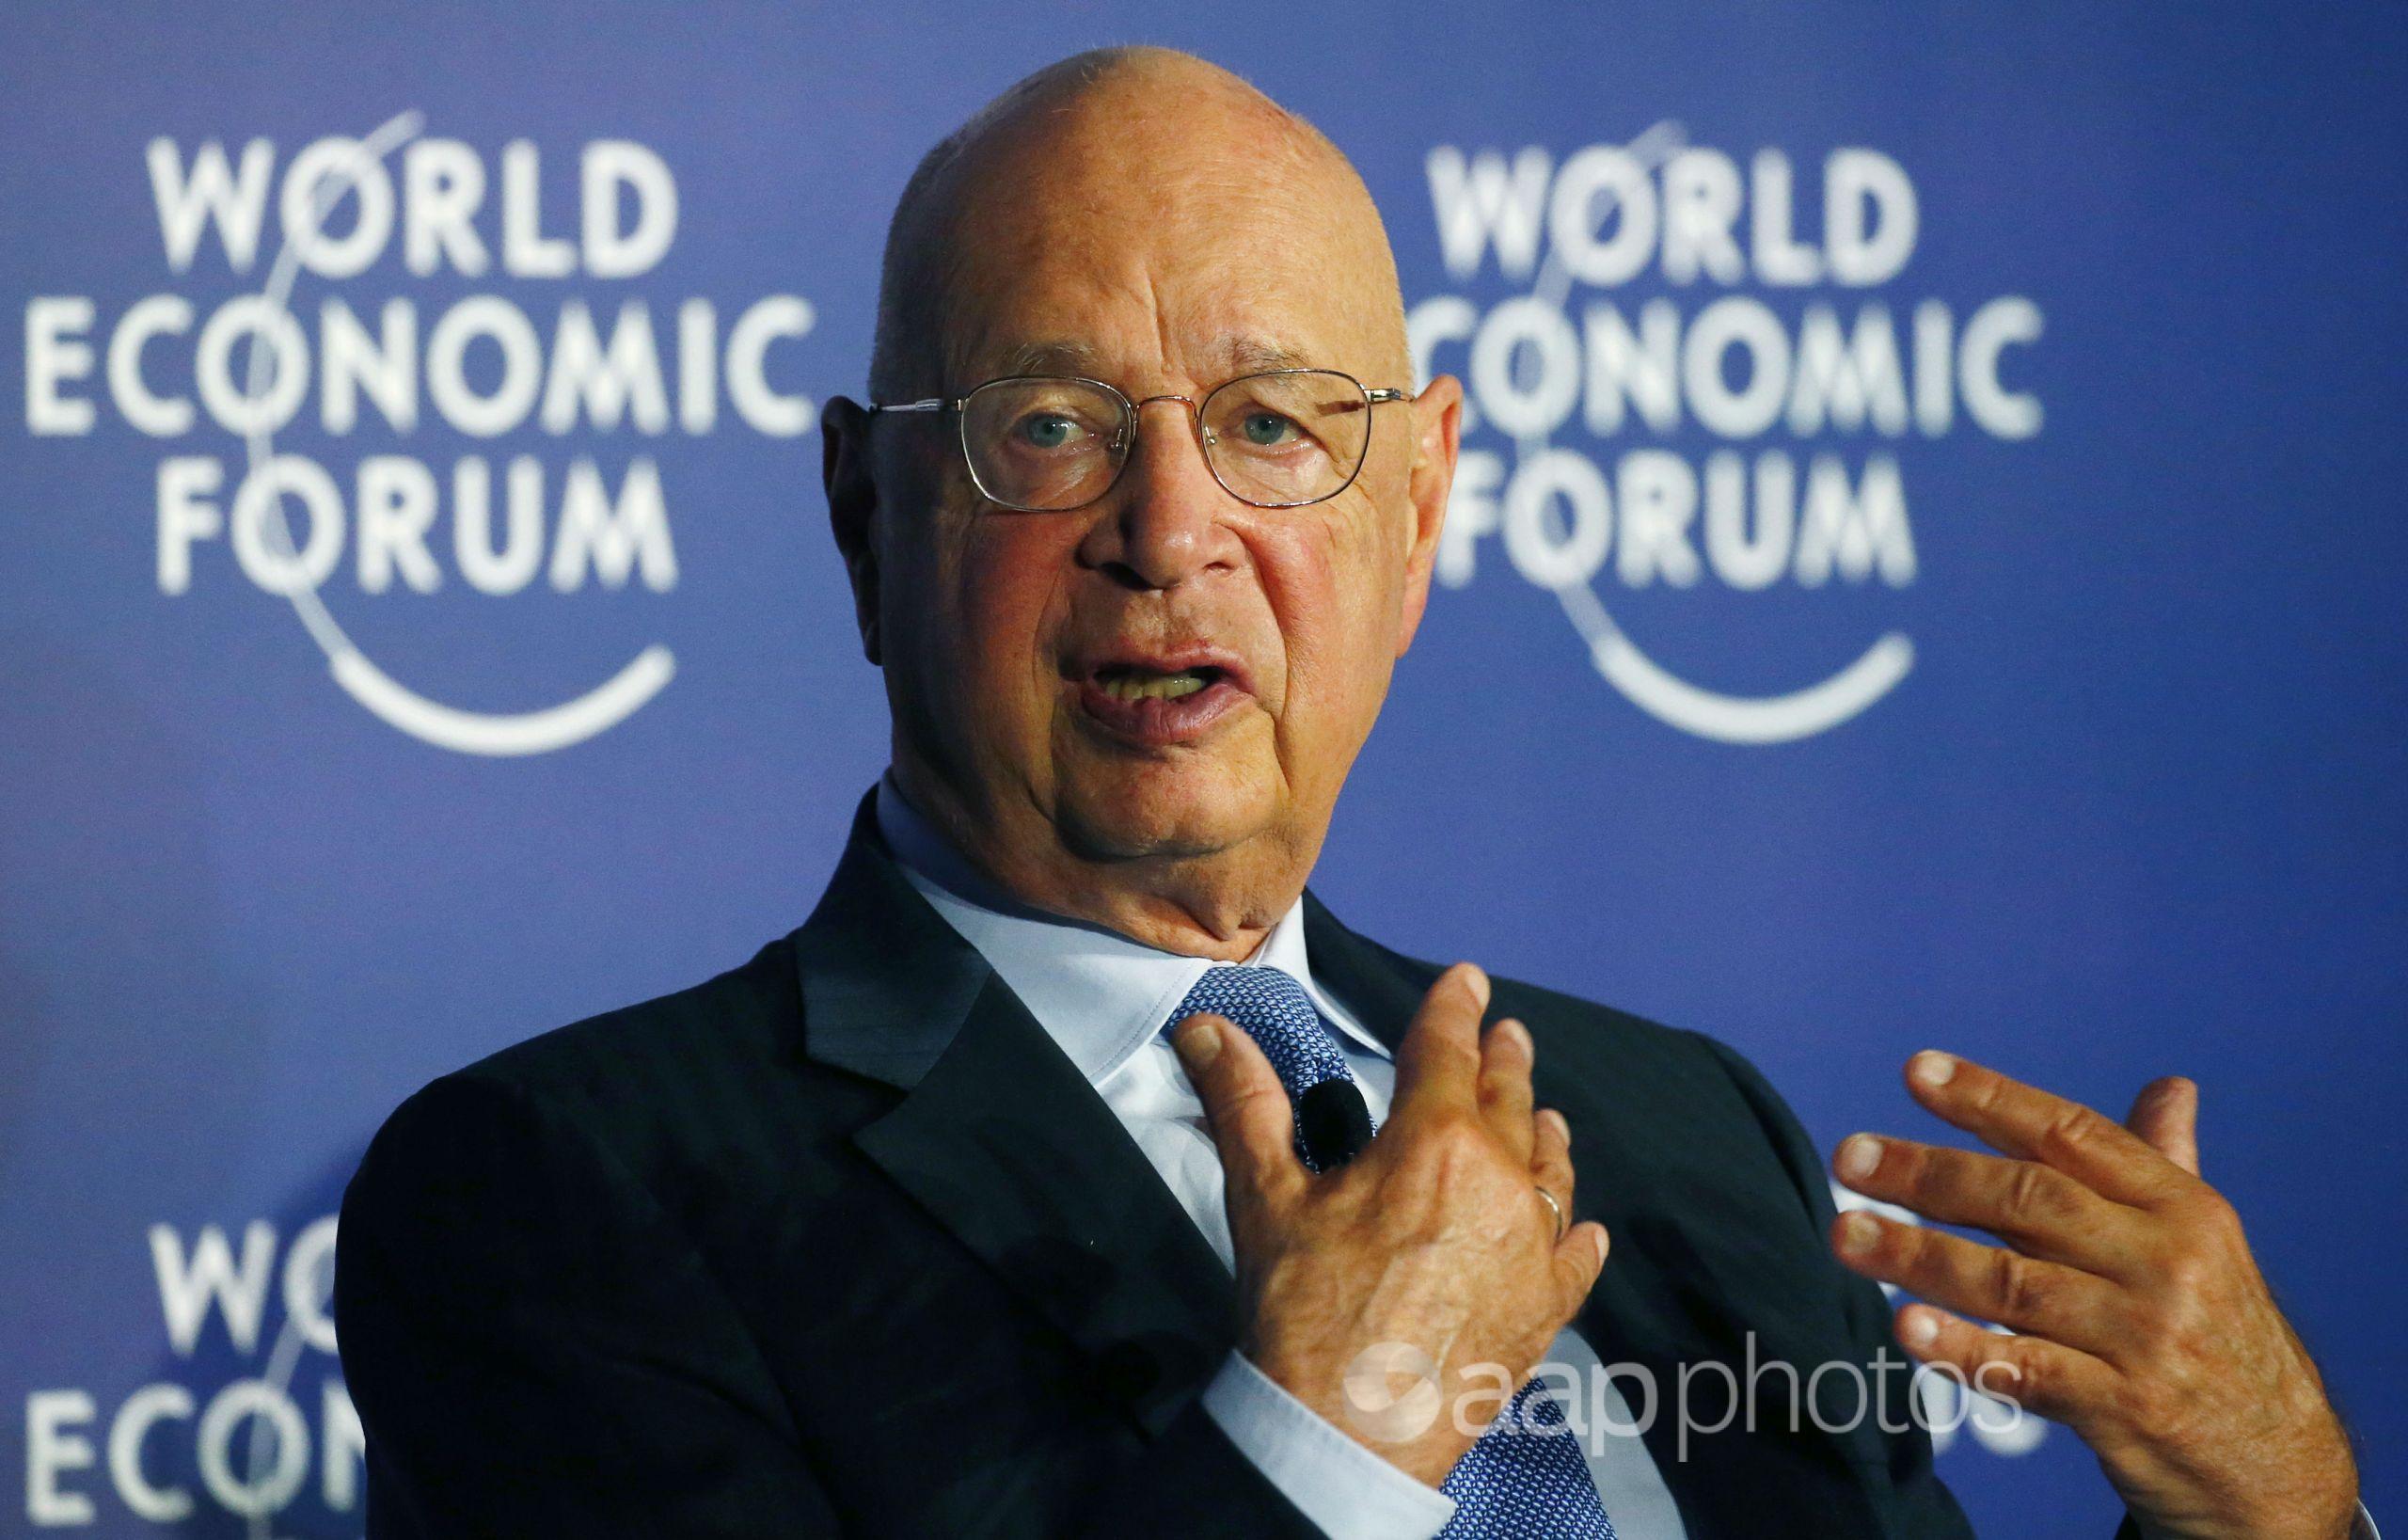 Klaus Schwab, executive chairman of the World Economic Forum